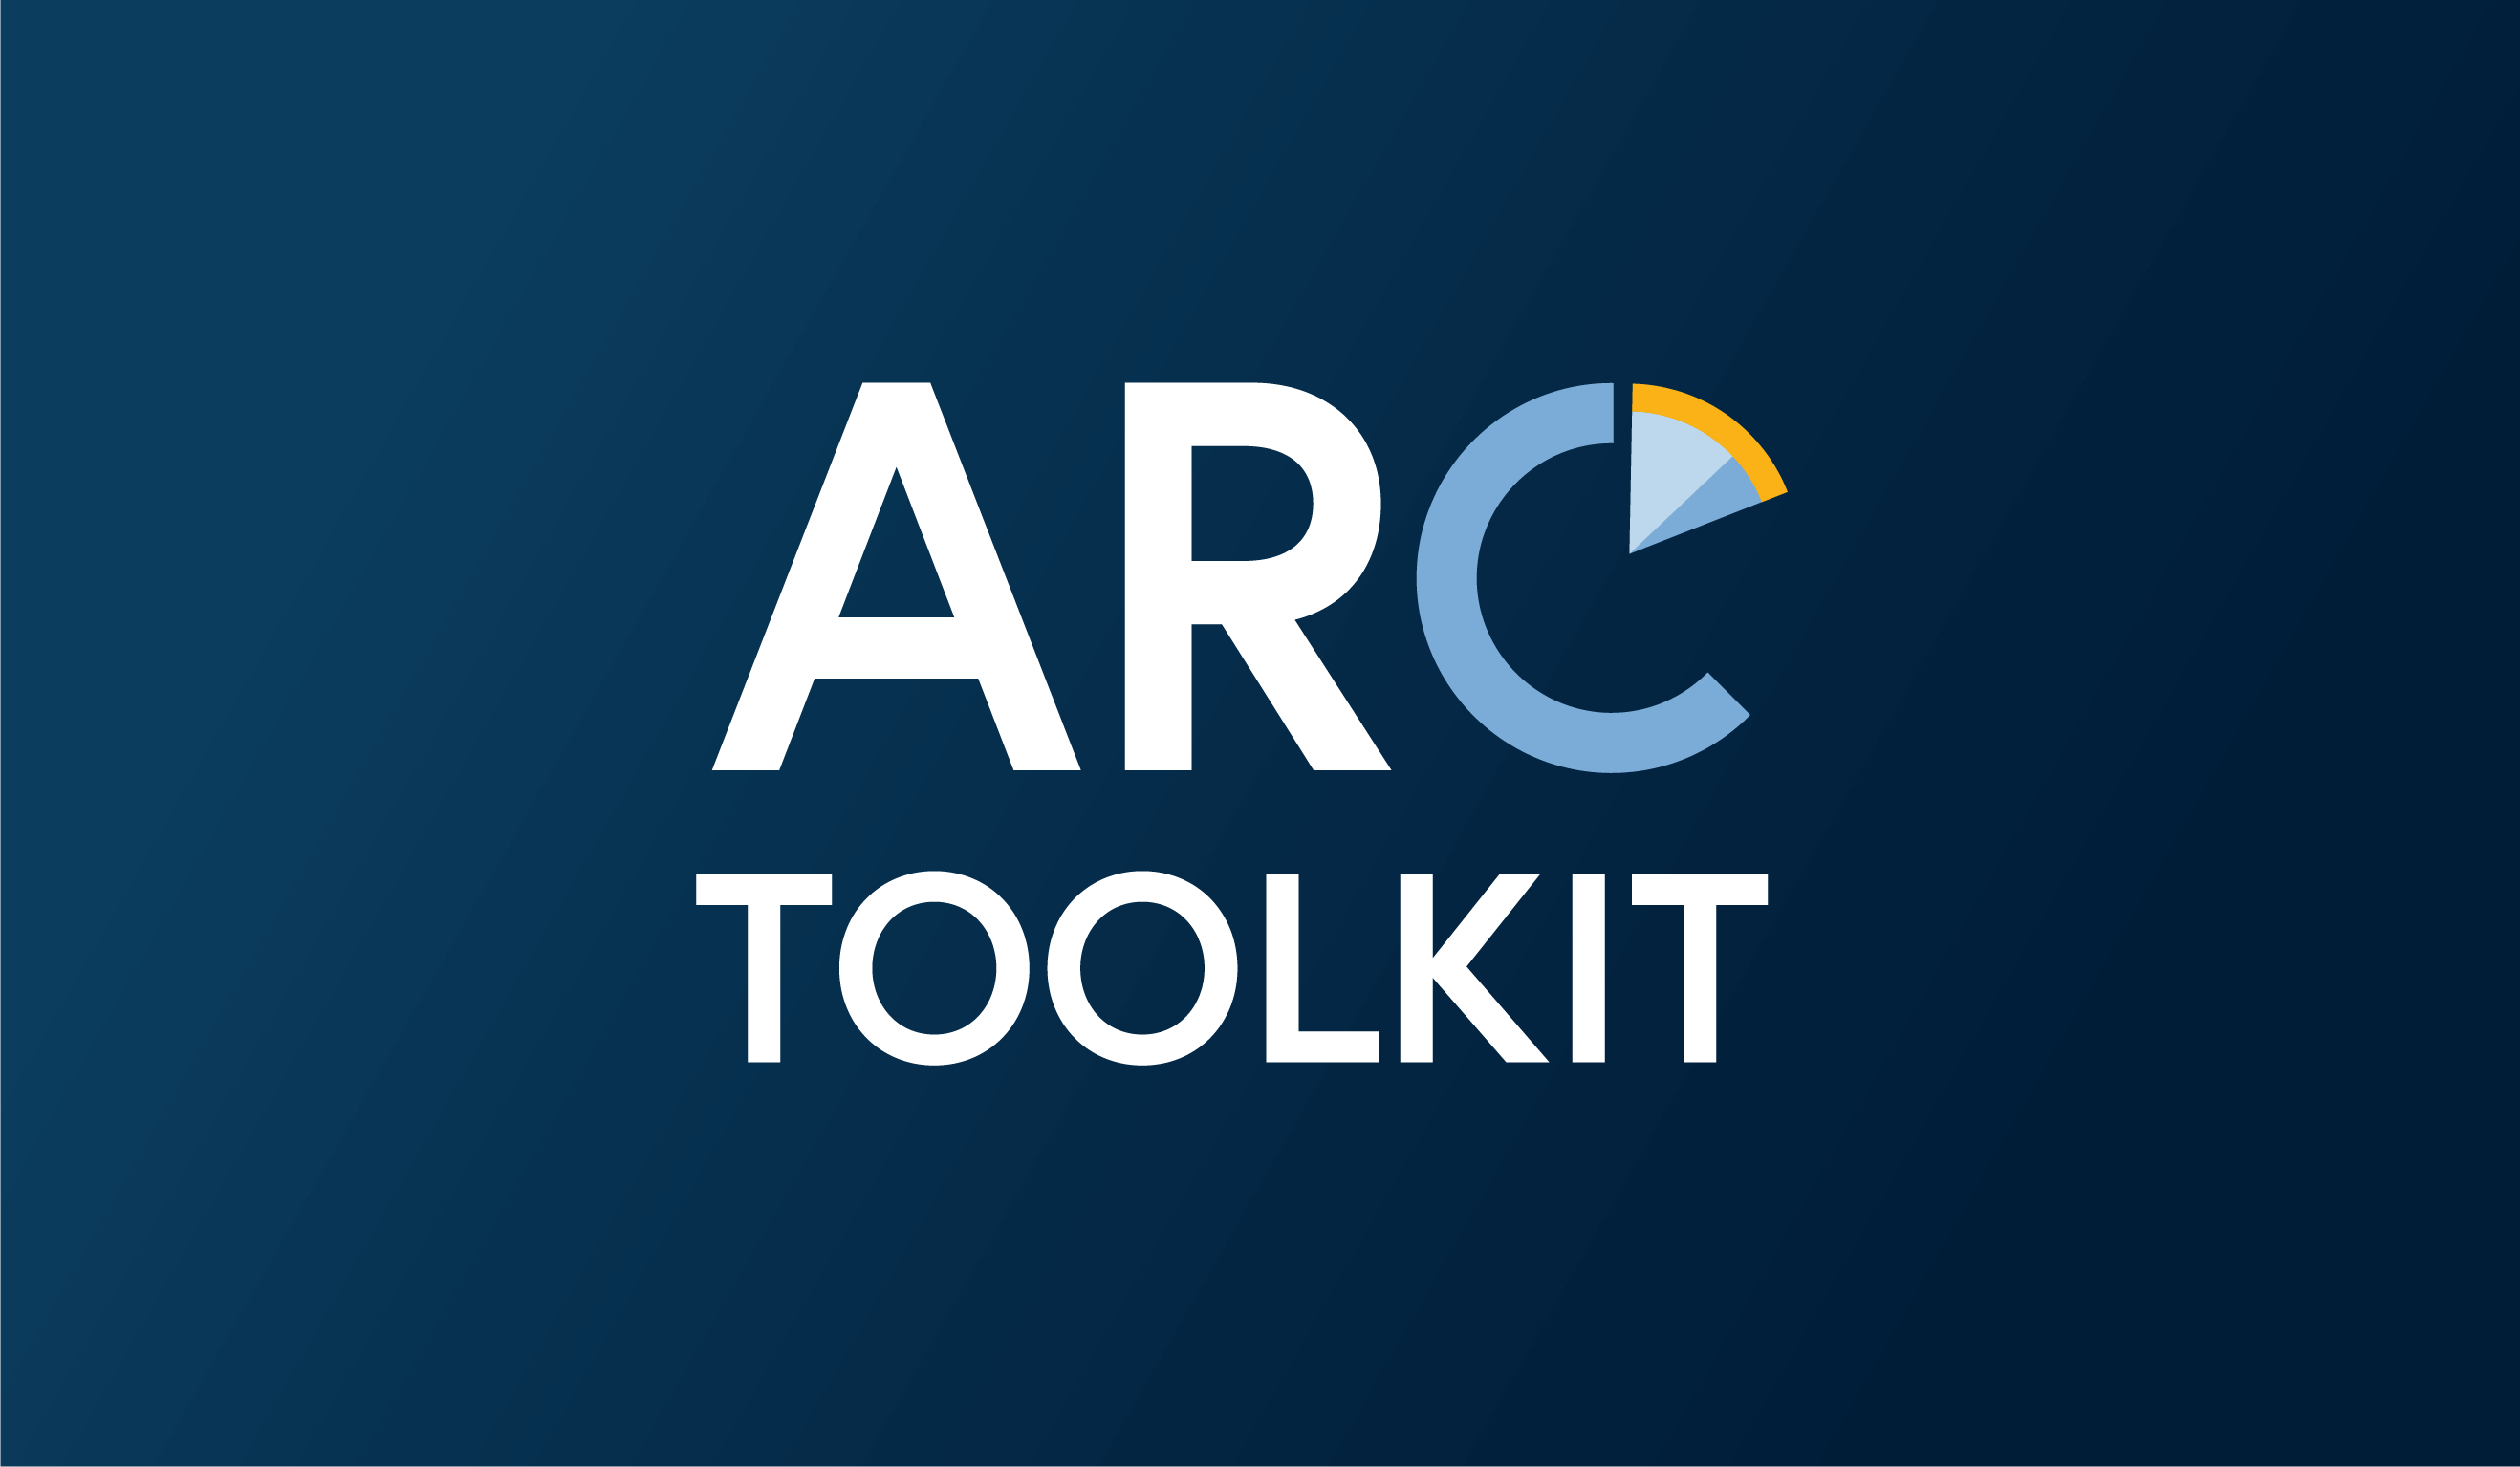 ARC Toolkit logo